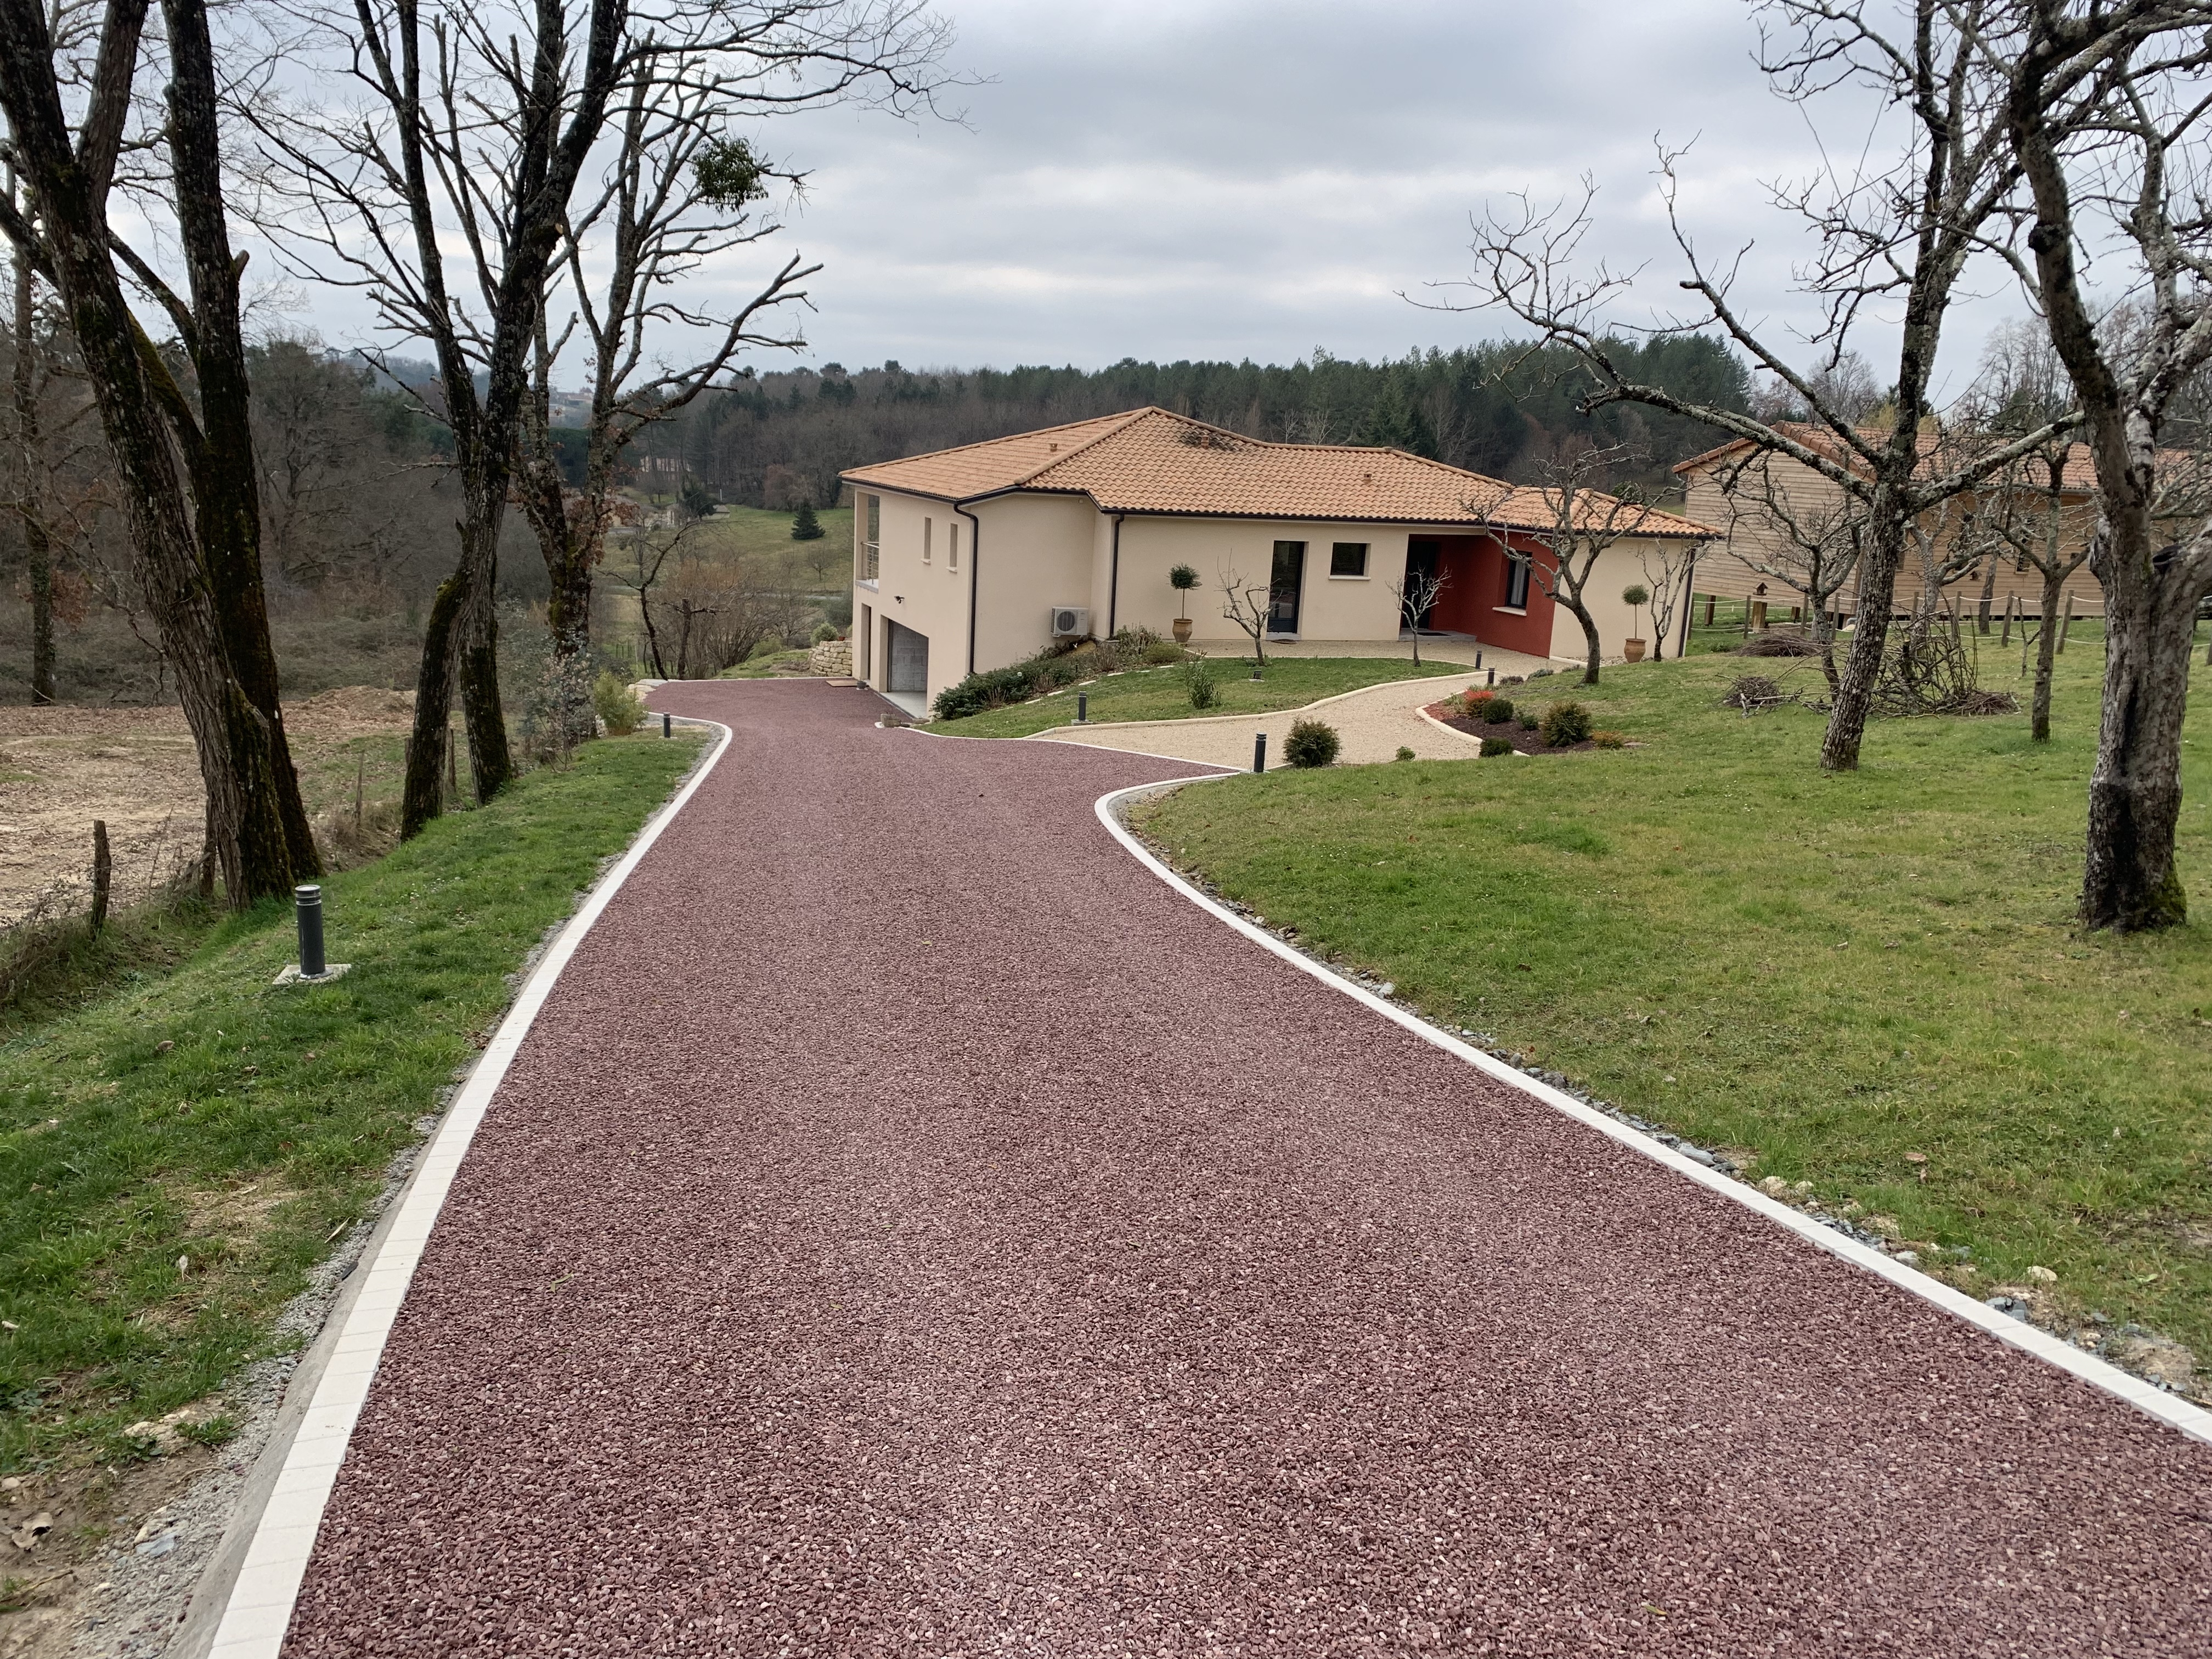 Conception Chemin en Alvostar et Gravistar - Dordogne ralise le 18/05/2021